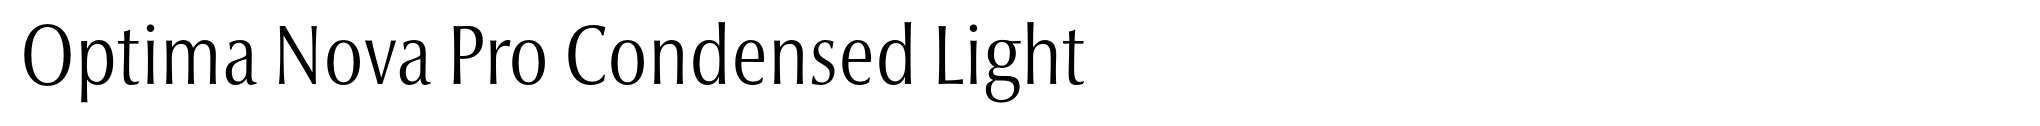 Optima Nova Pro Condensed Light image